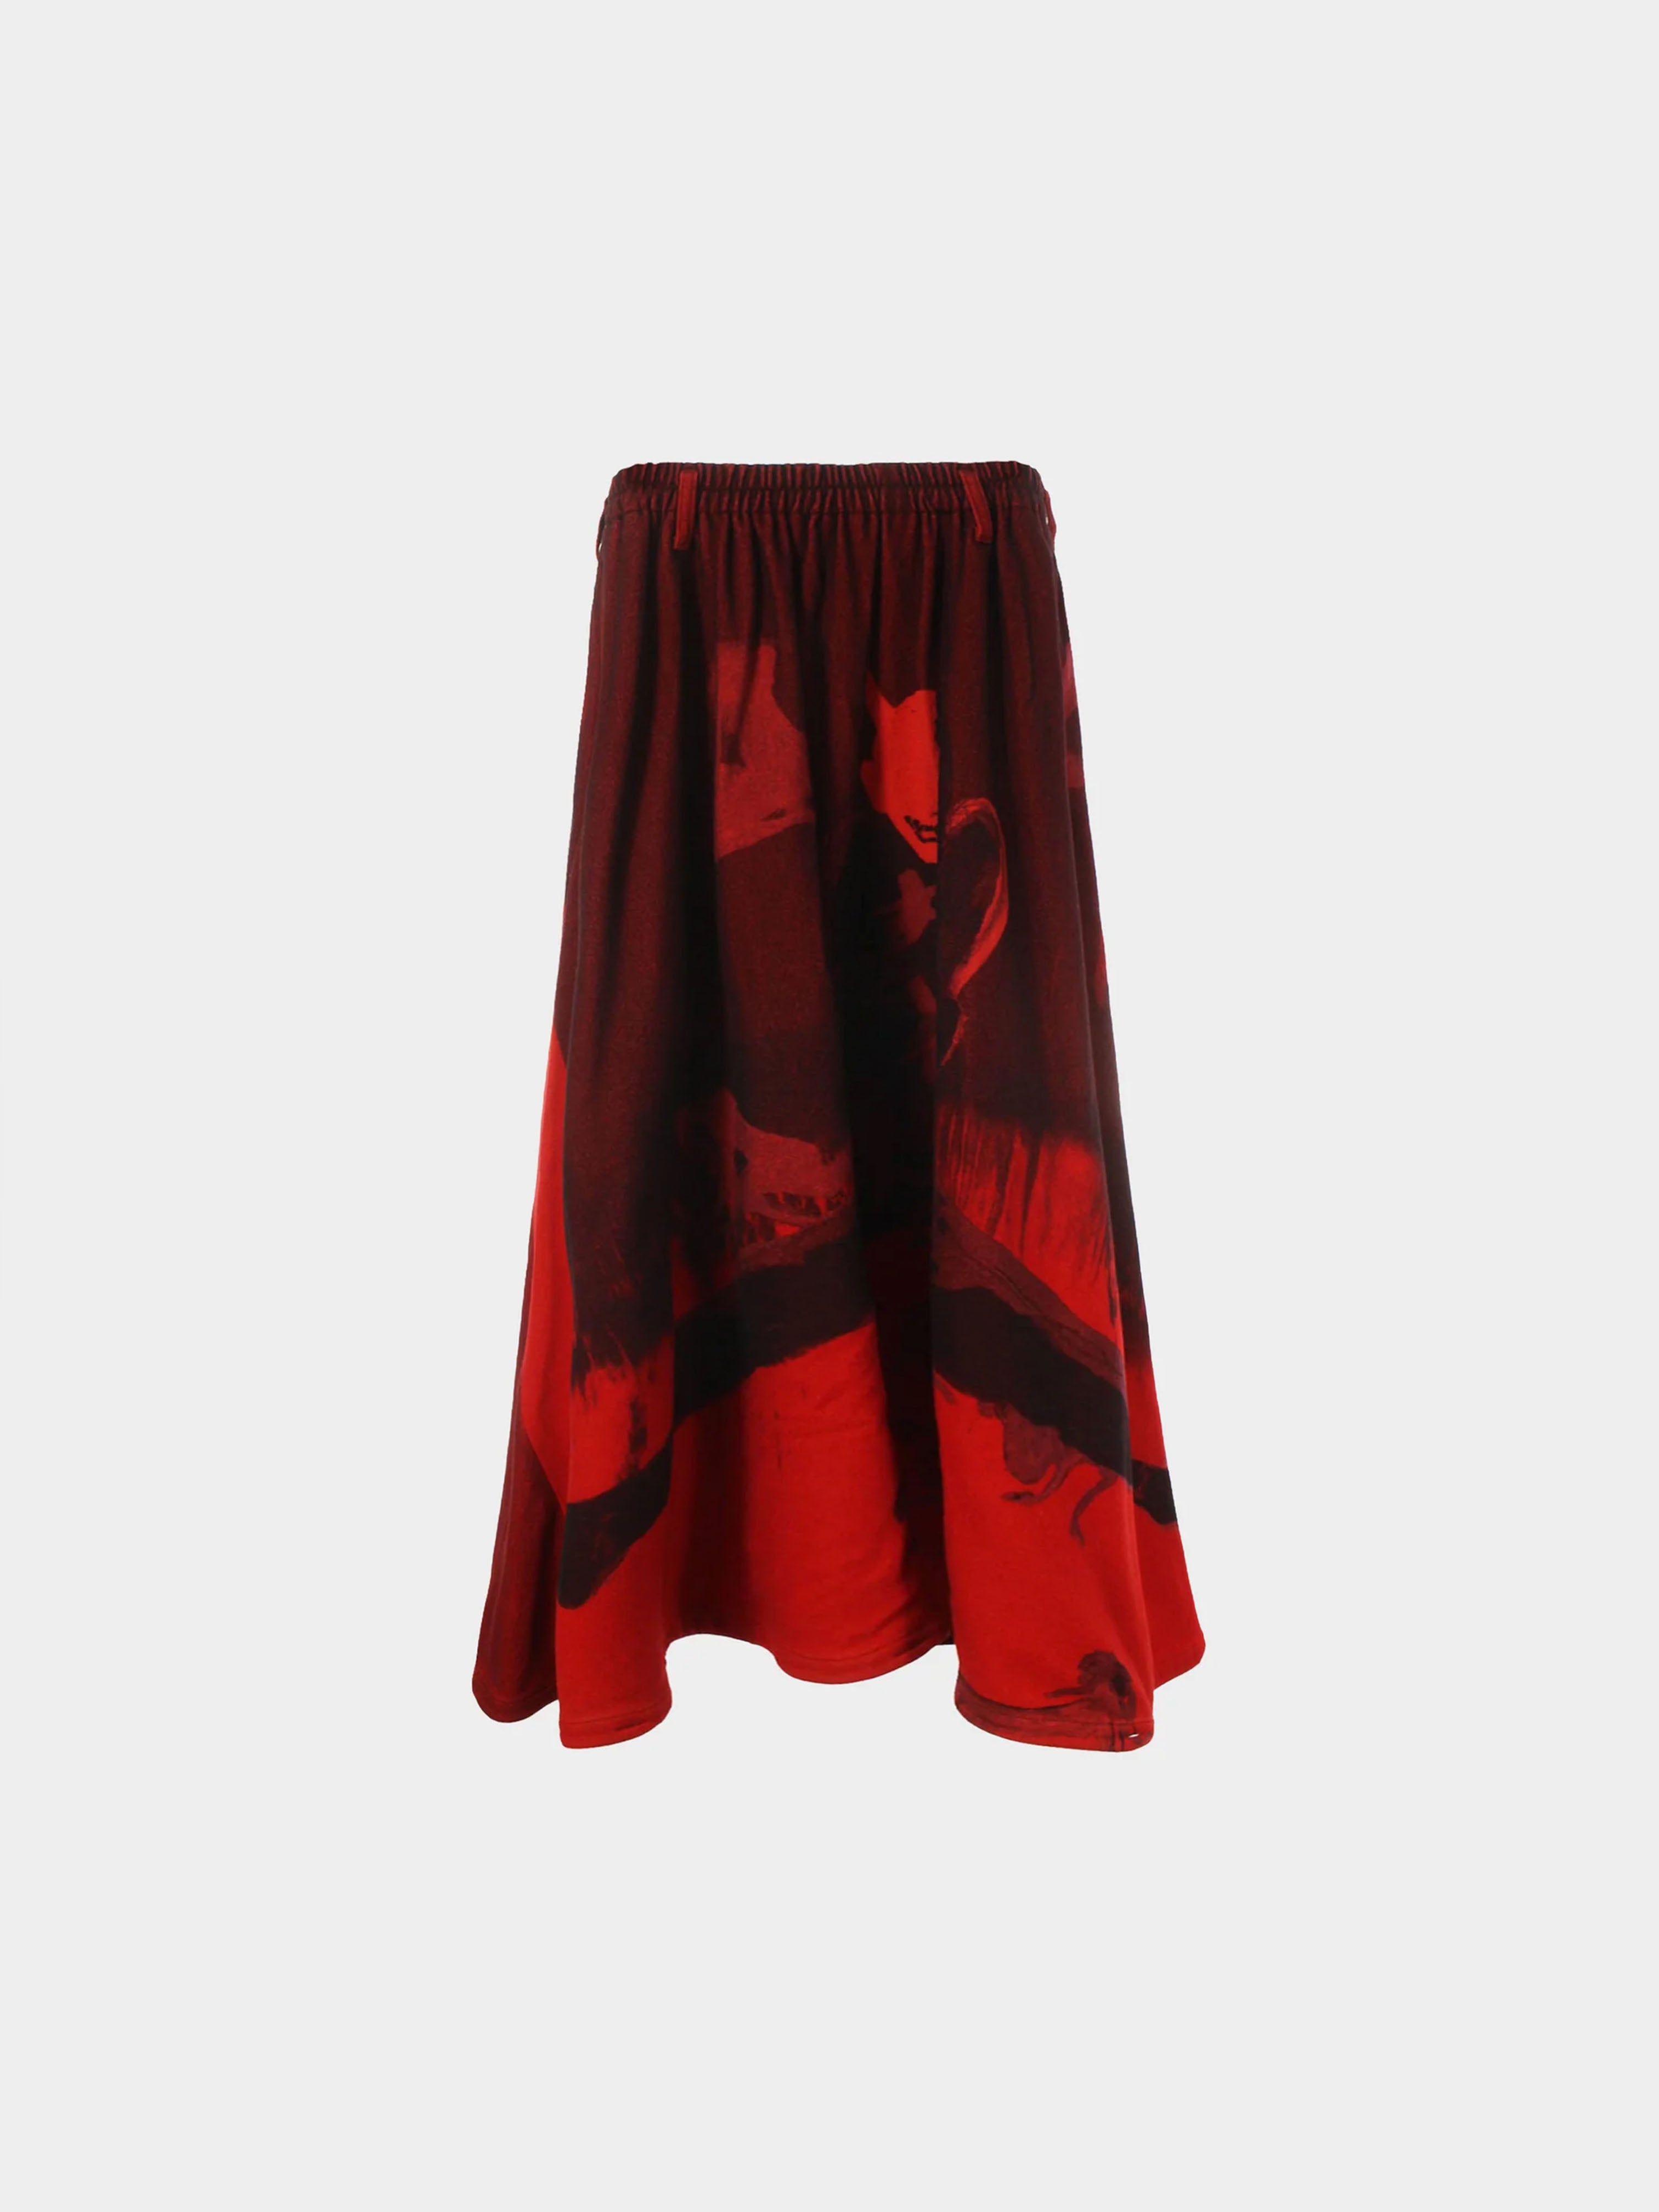 Yohji Yamamoto FW 2018 Pour Homme Red Long Skirt